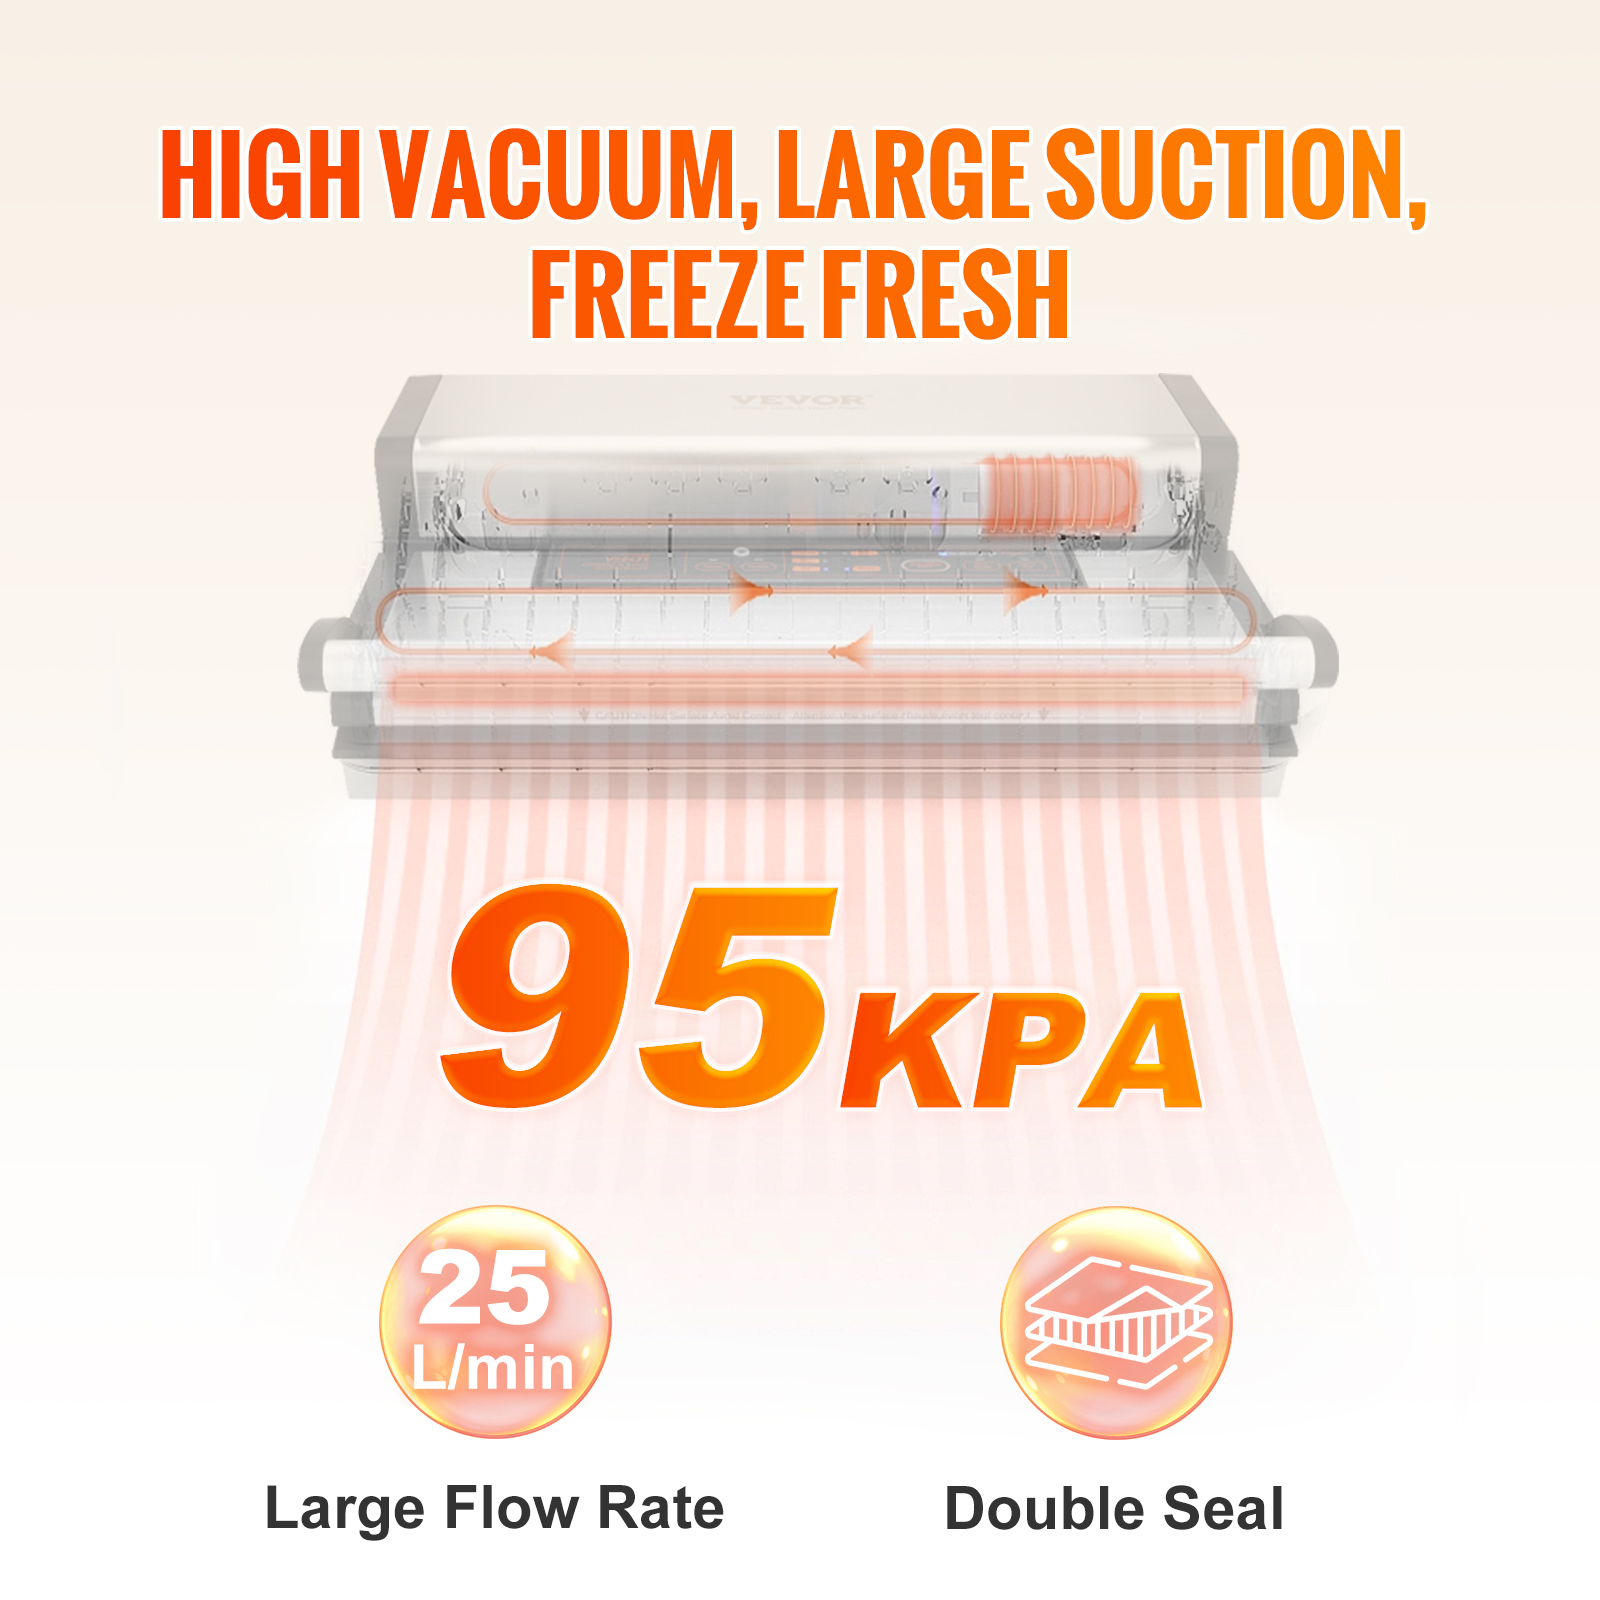 Vacuum Sealer Machine, Full Automatic Food Sealer (95Kpa), vacuum sealers  bags, Air Sealing System Dry, Moist Food Preservation Modes, Lab Tested,  LED